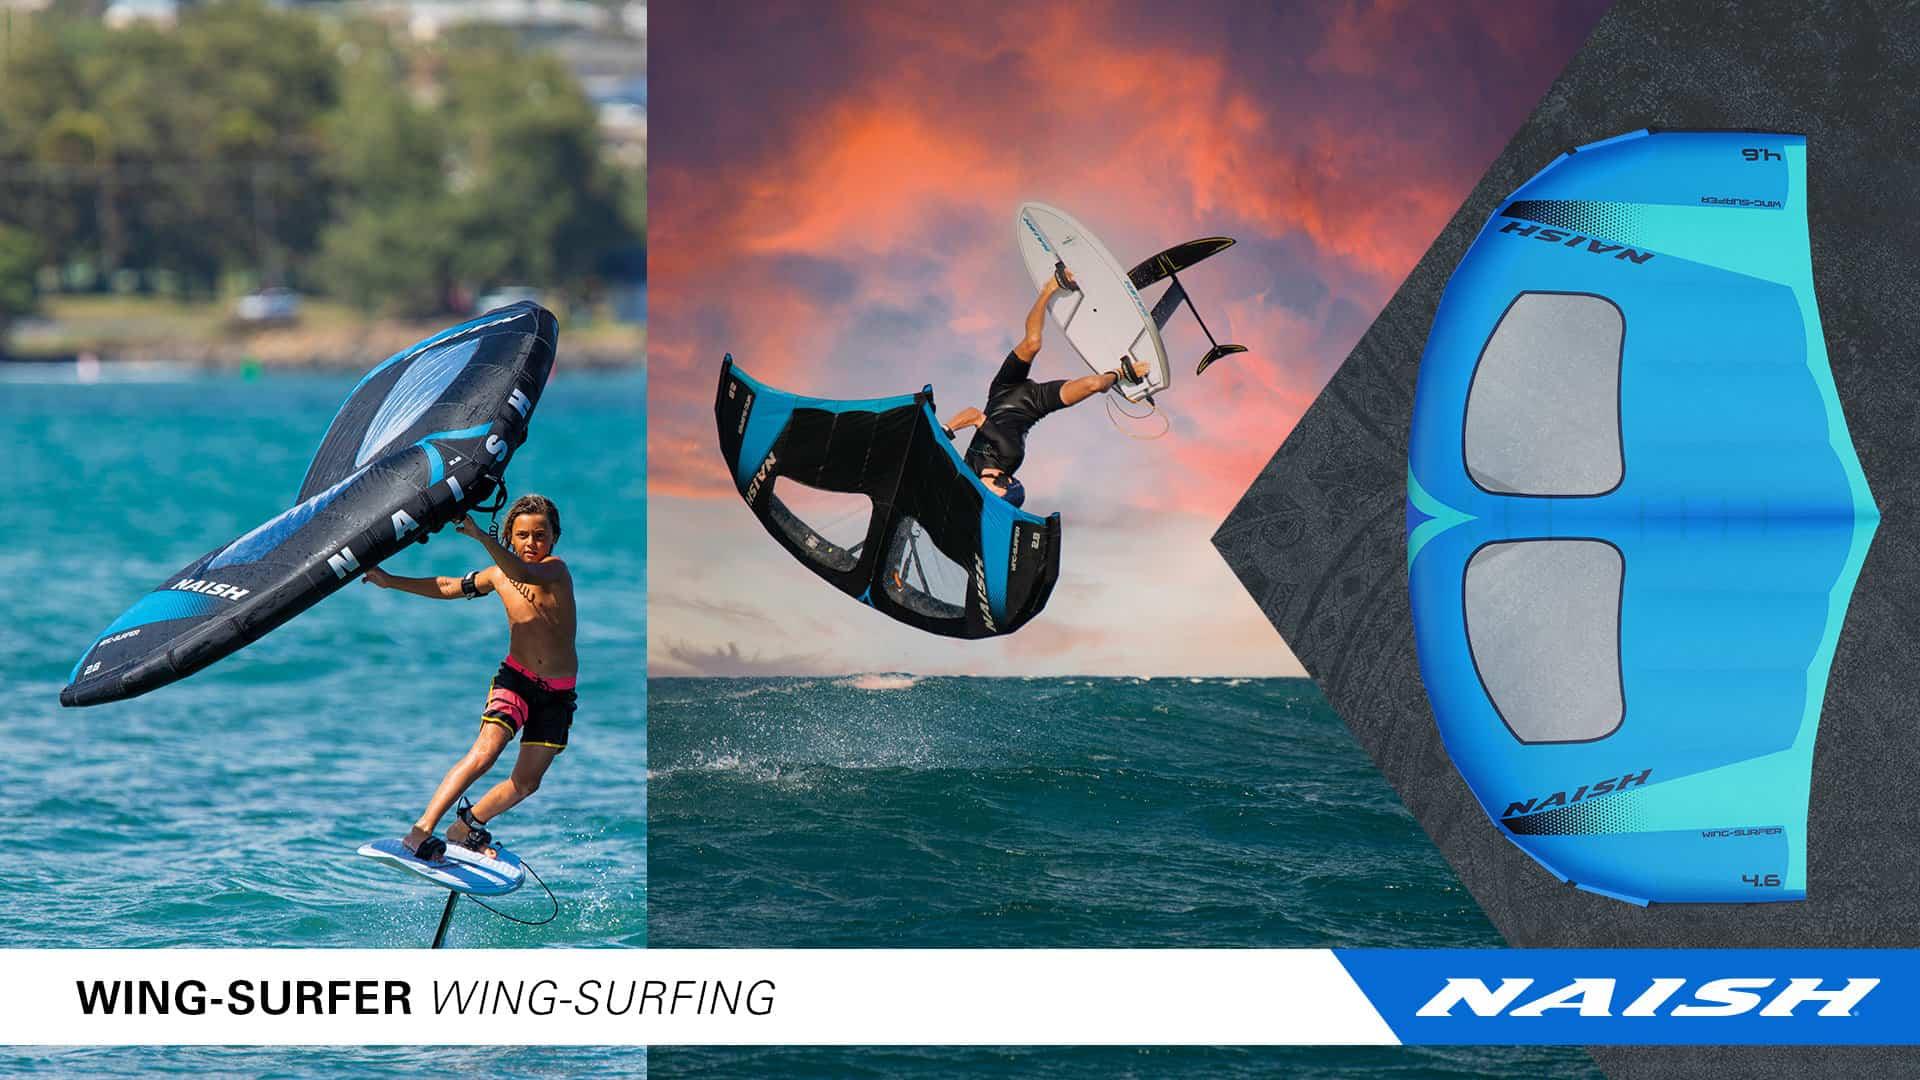 Introducing the New Wing-Surfer - Naish.com